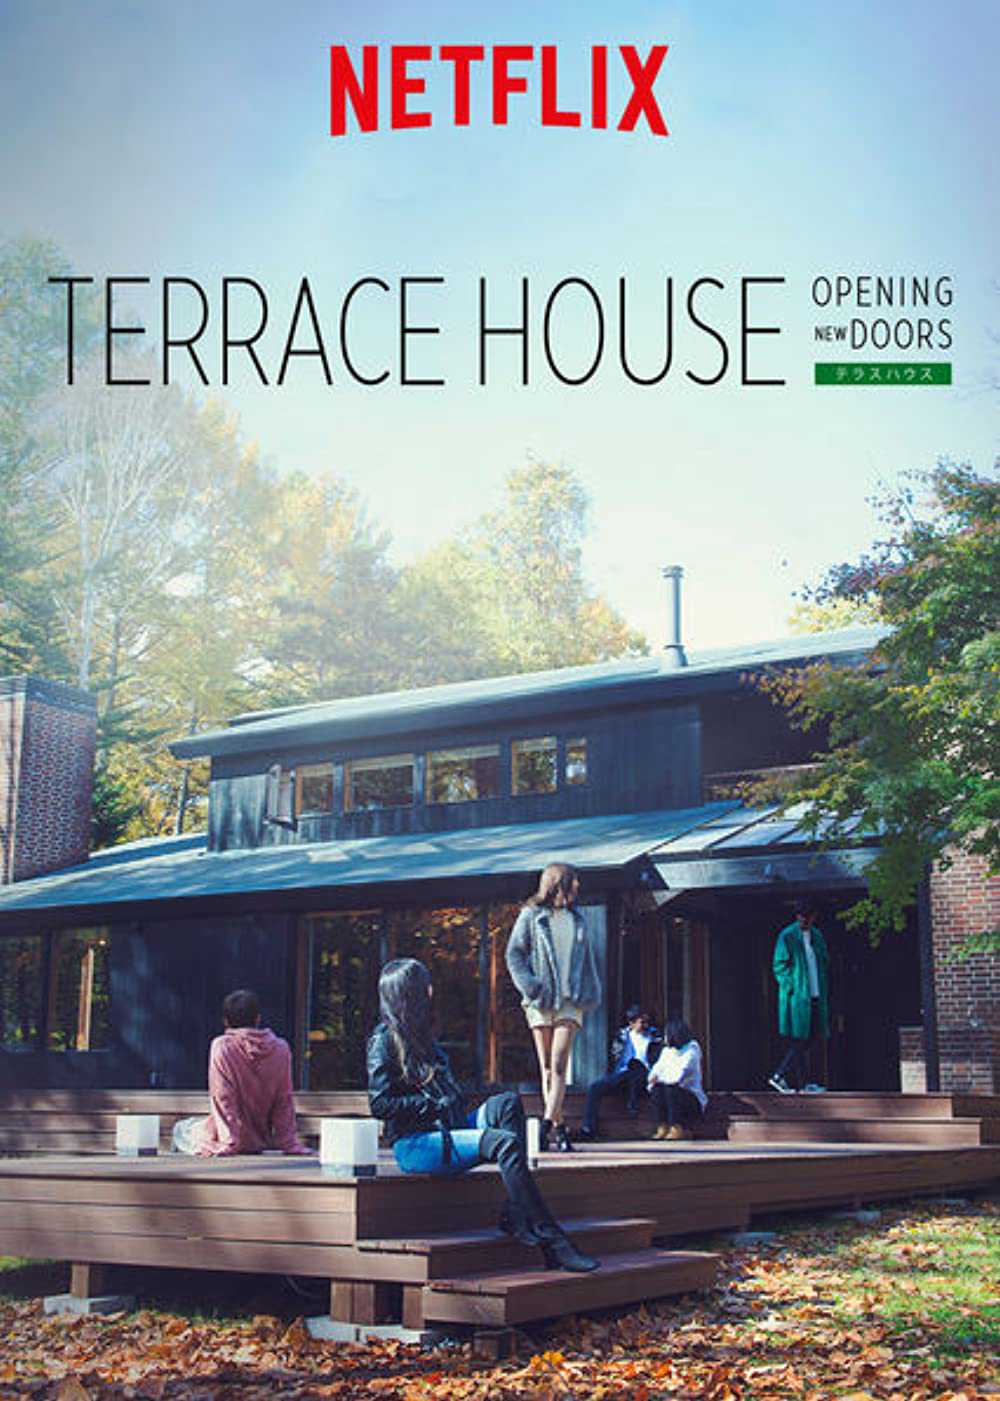 Terrace house: chân trời mới (phần 4) - Terrace house: opening new doors (season 4)